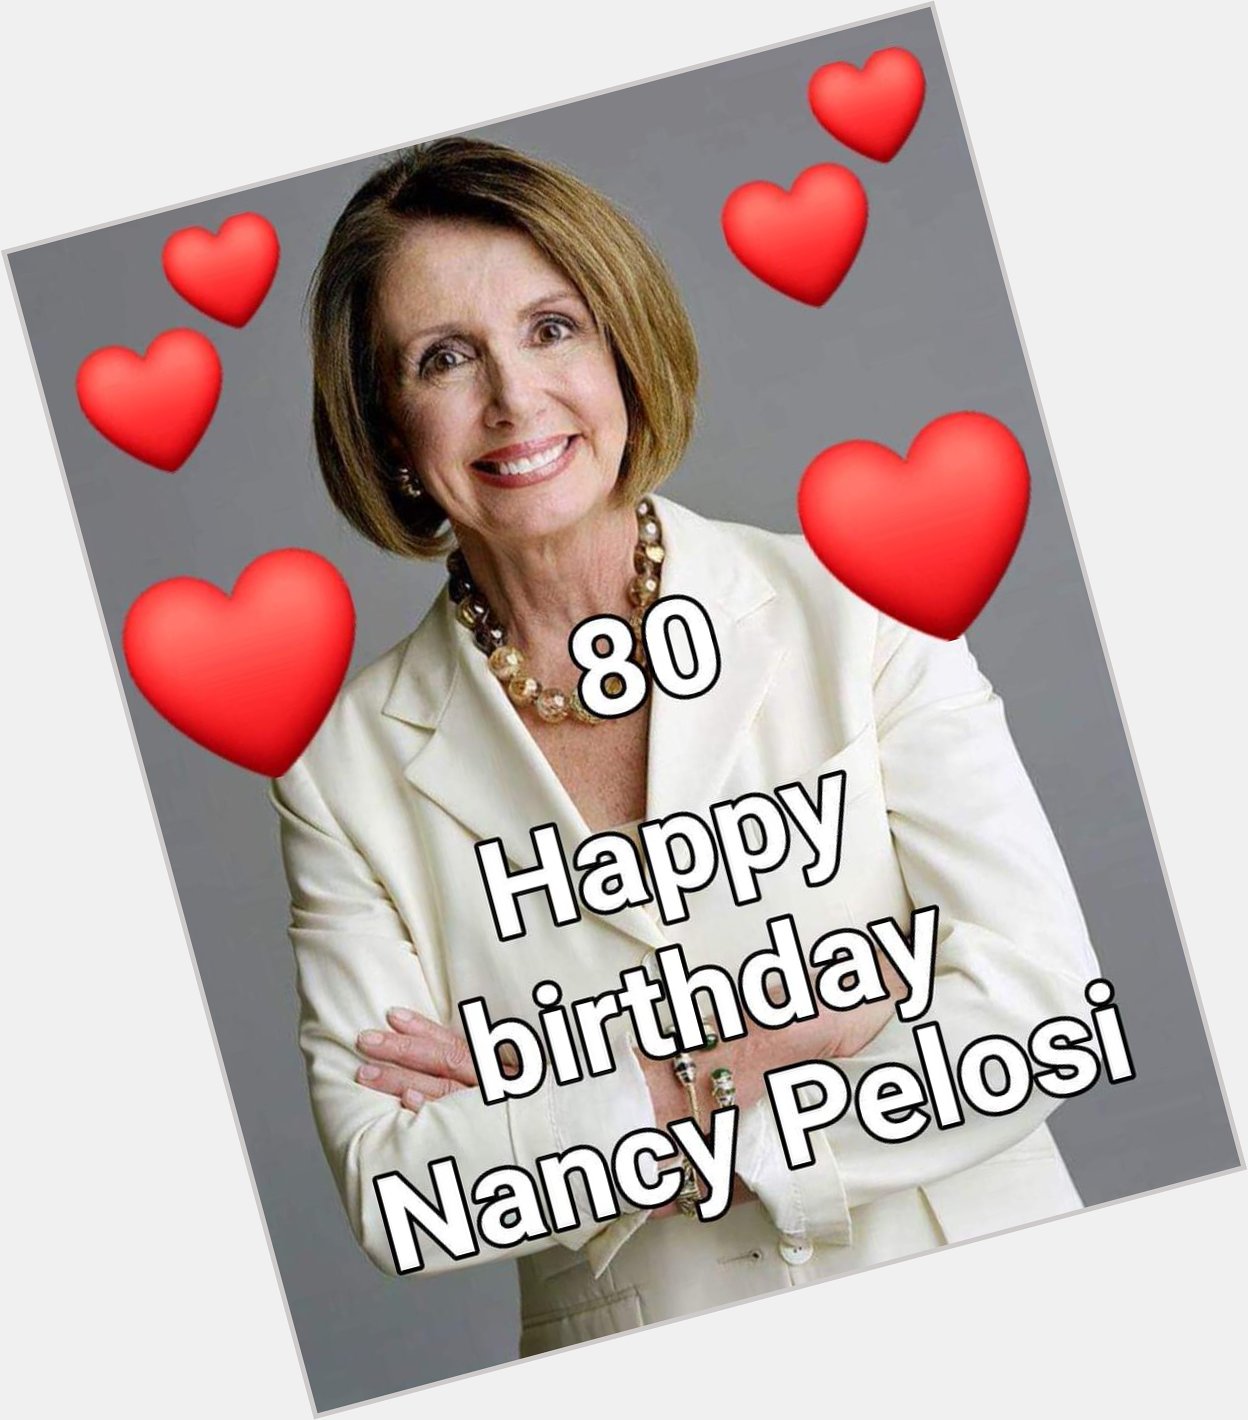  HAPPY BIRTHDAY NANCY PELOSI.
MOST ADMIRED WOMAN! 